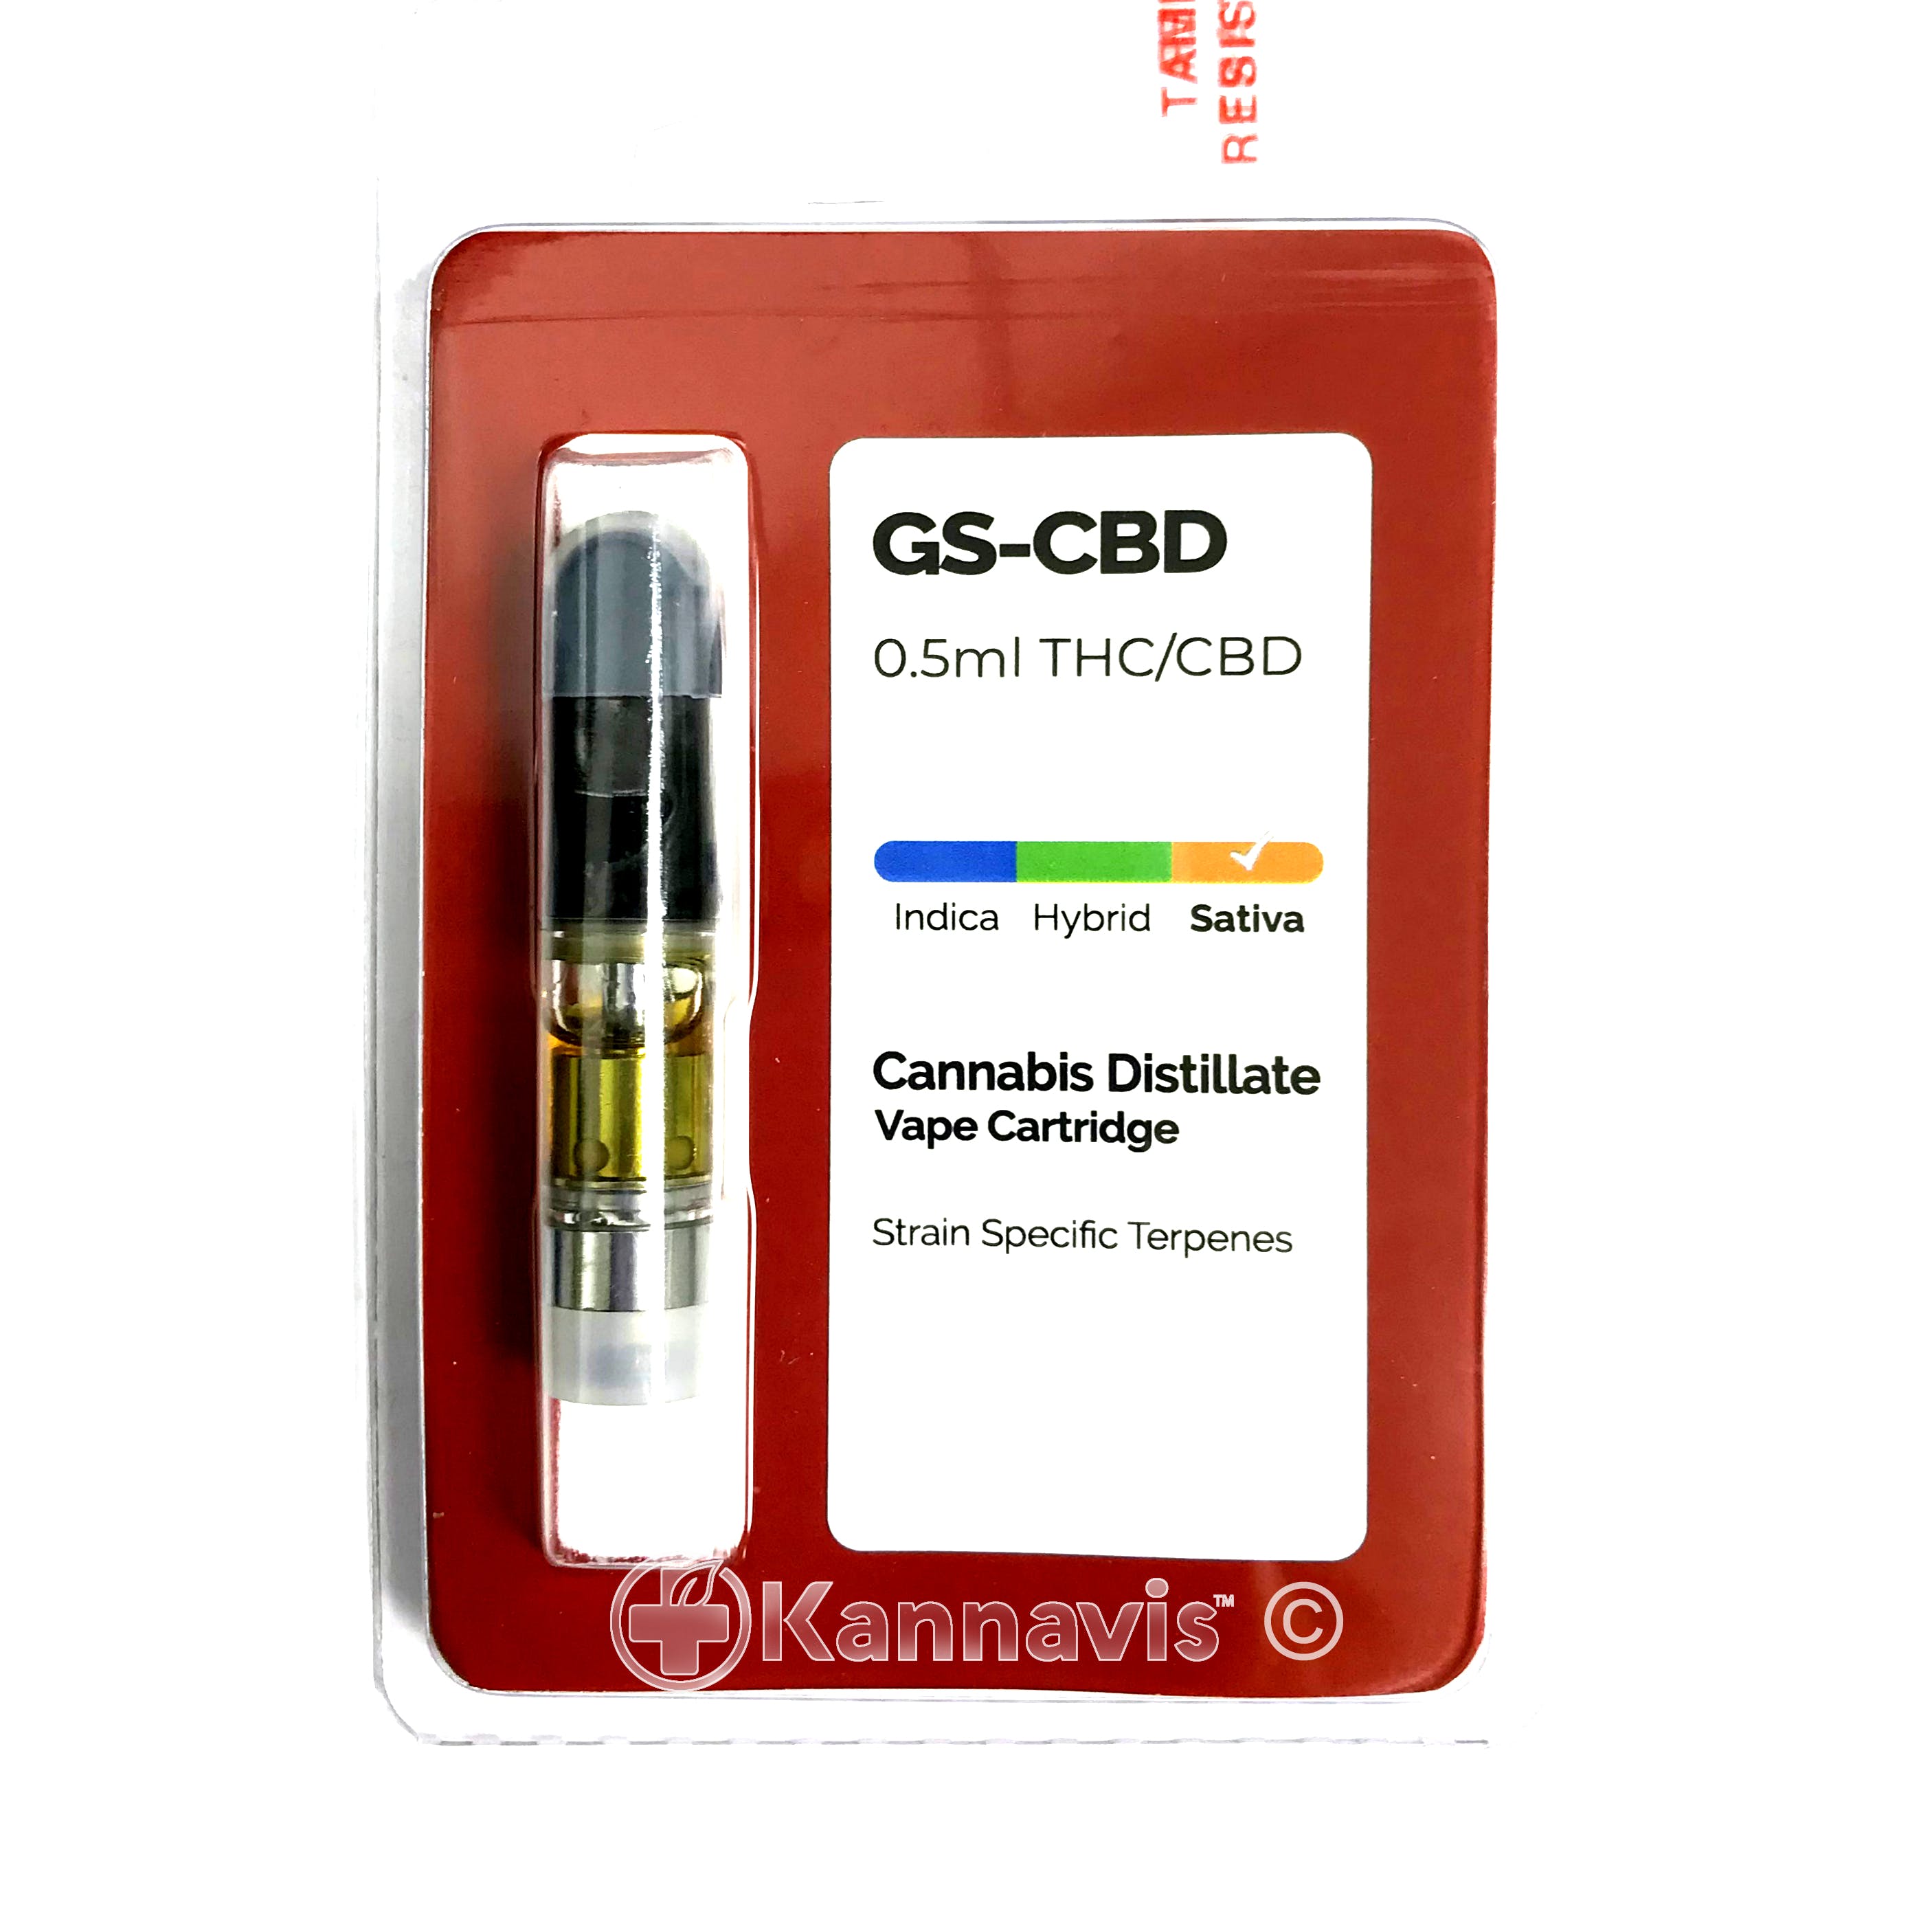 Evermore Cannabis Company - GS-CBD distillate cartridge